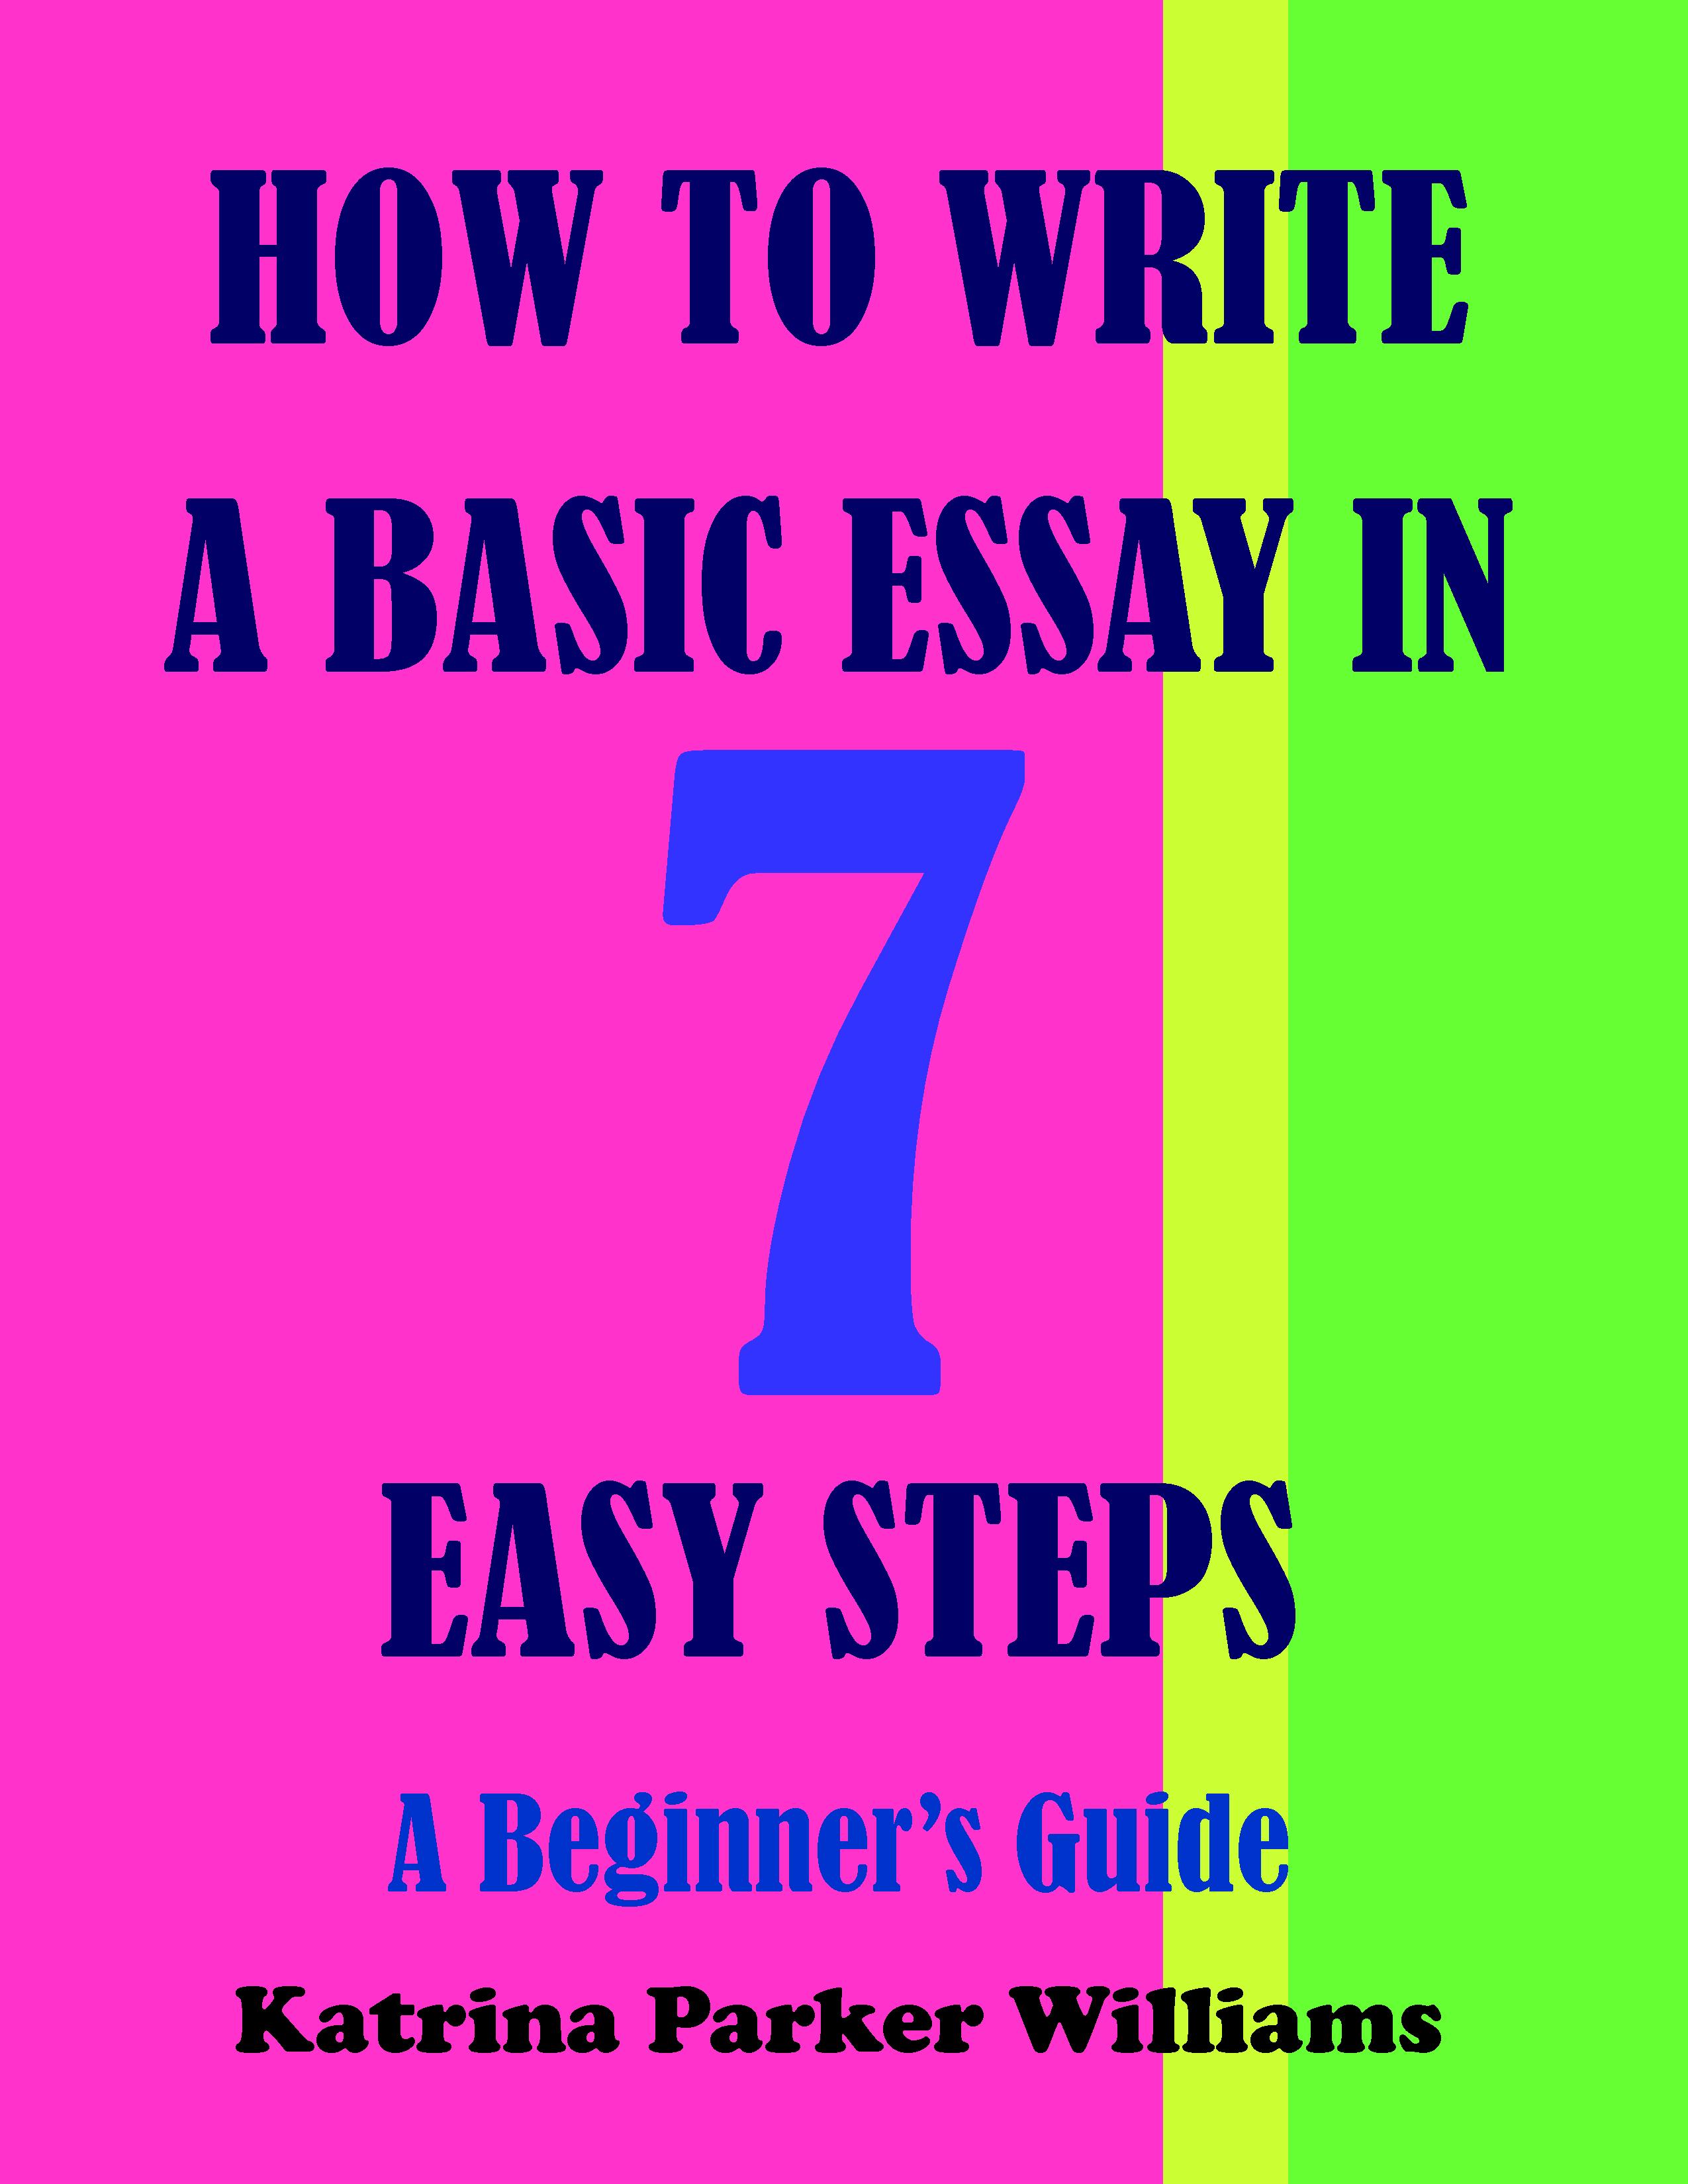 Steps to writing a good essay